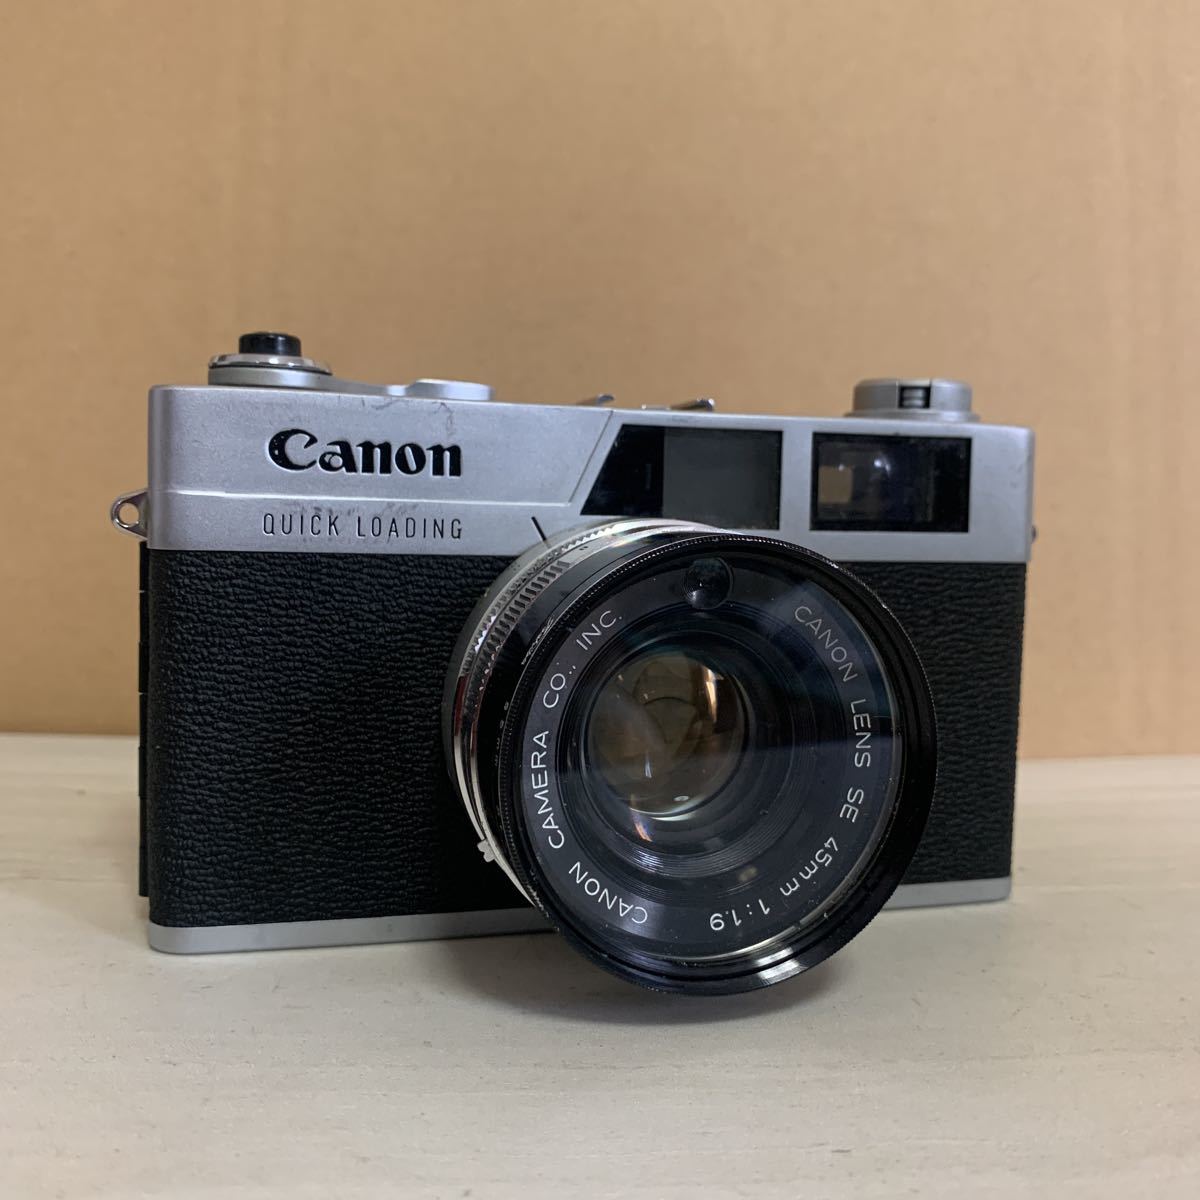 Canon Canonet QL 19 Canon range finder film camera not yet verification 2836